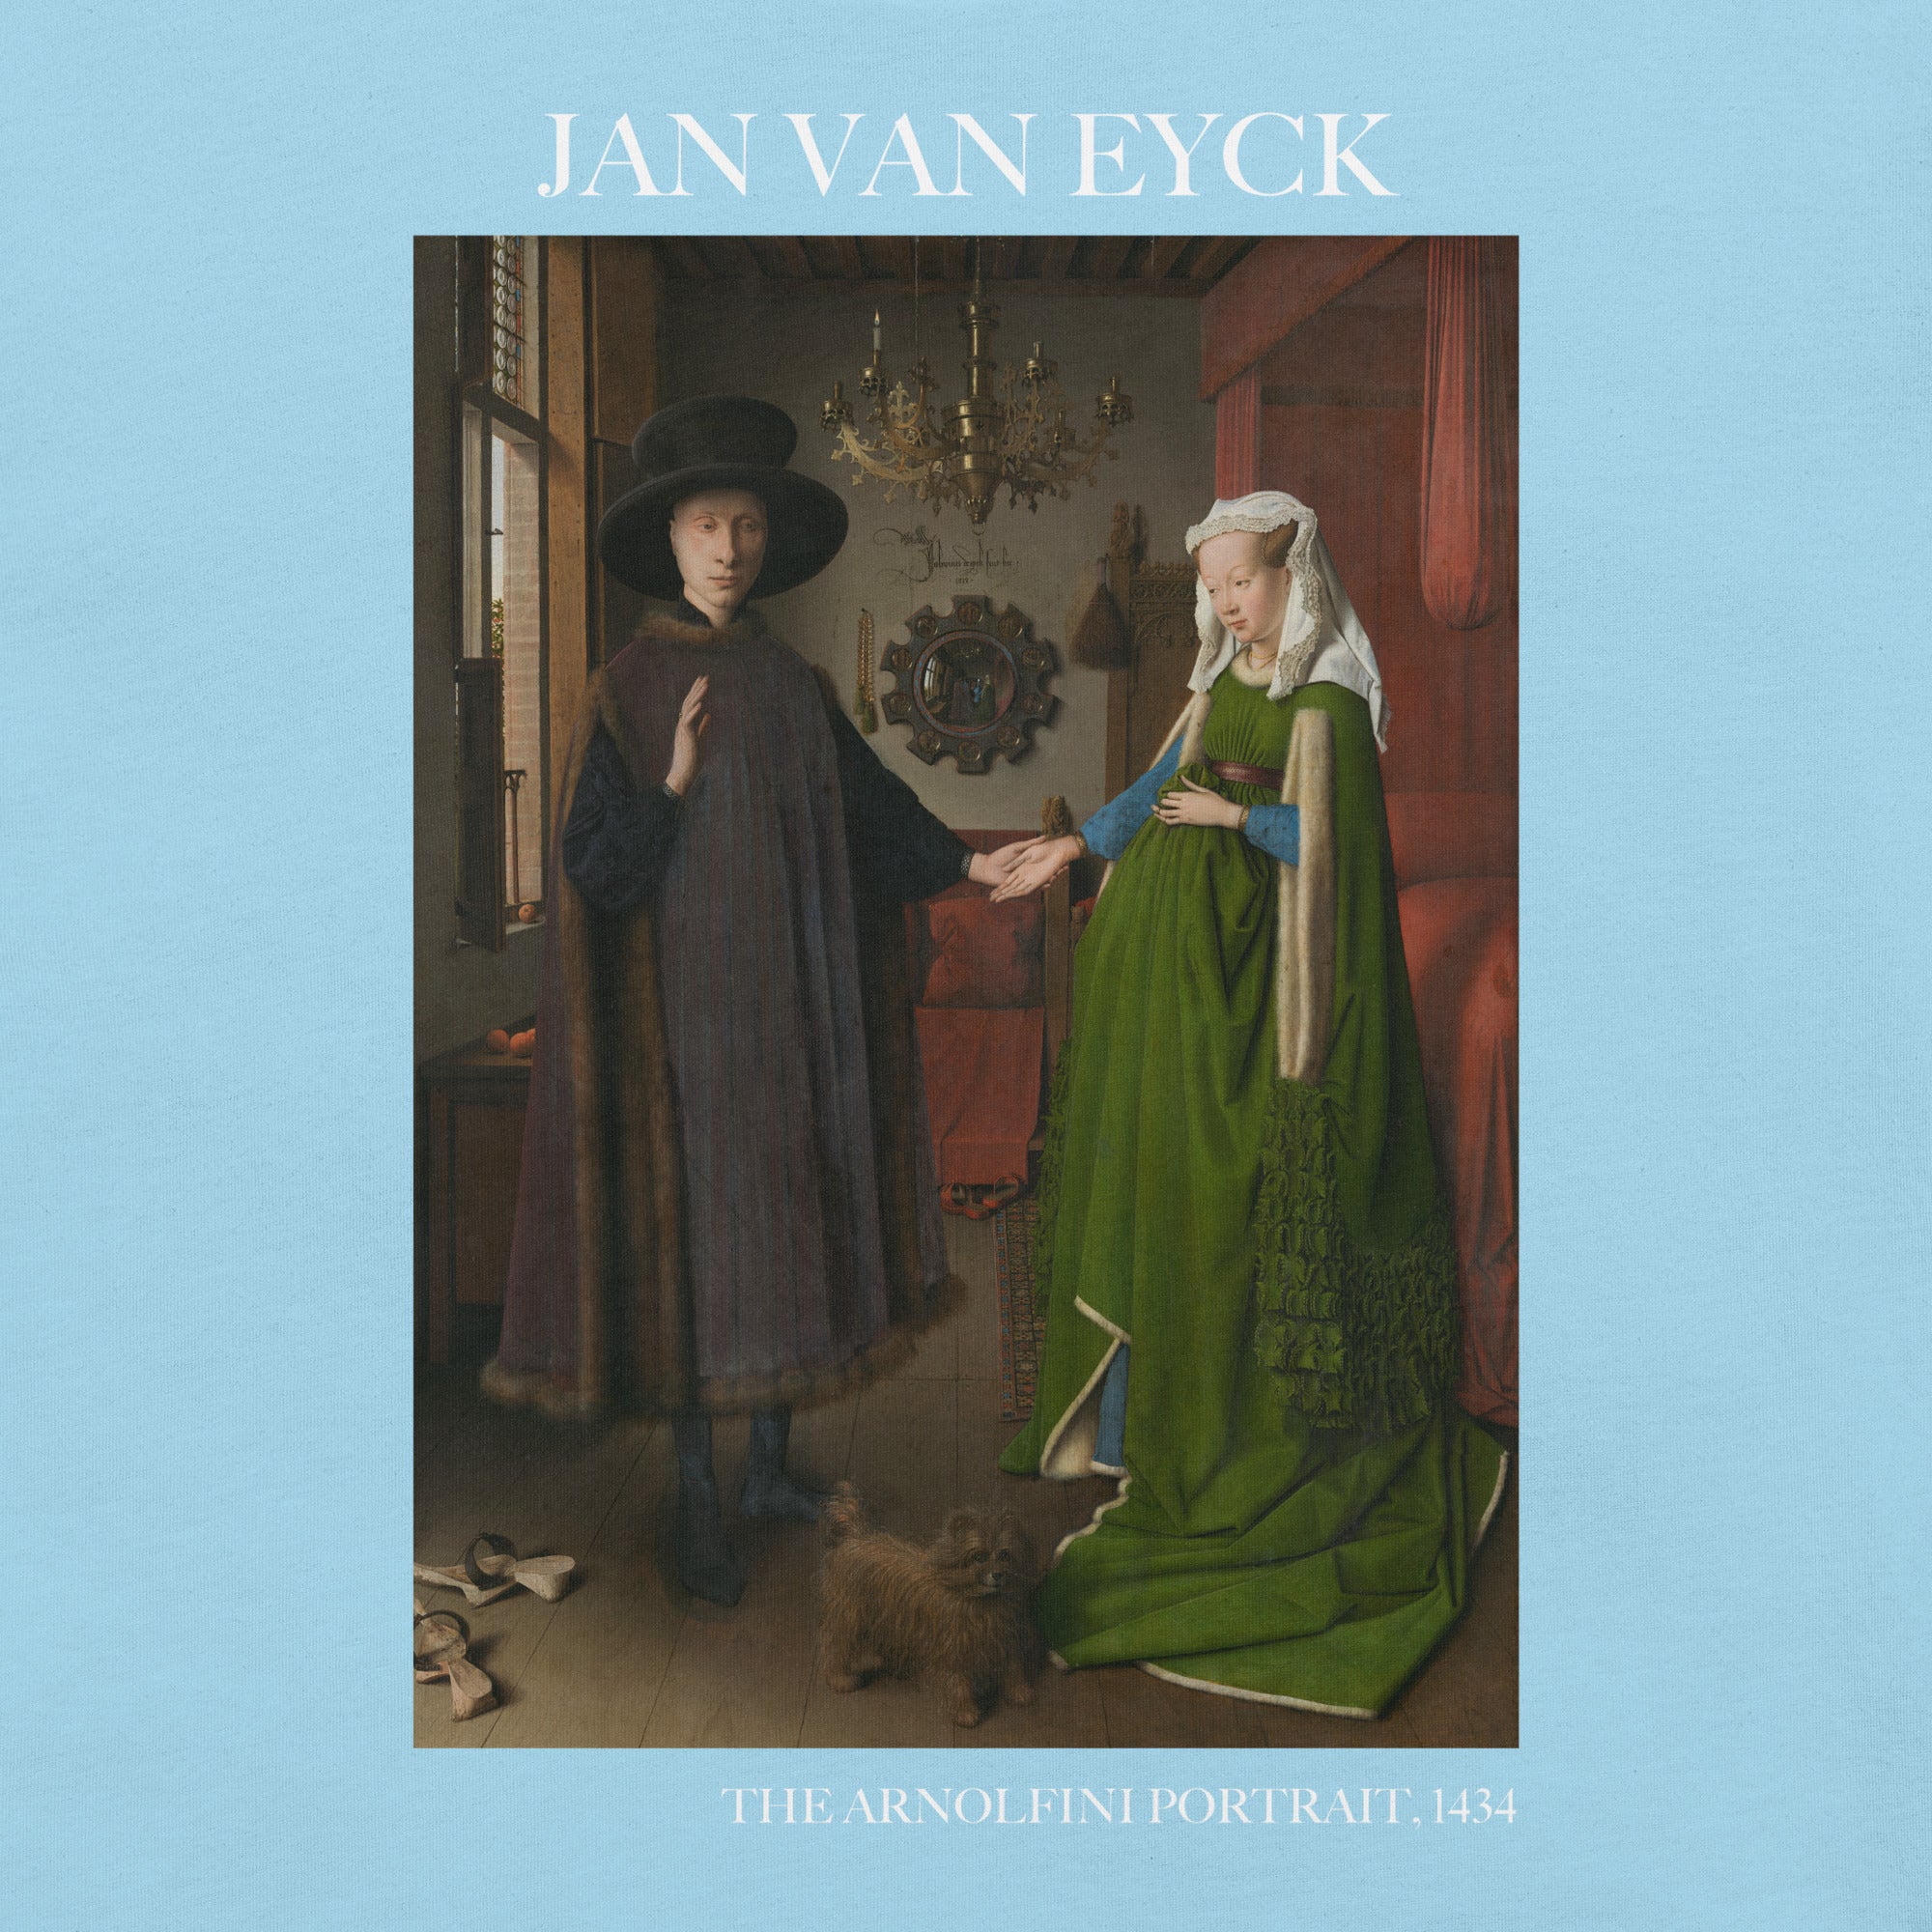 Jan van Eyck 'The Arnolfini Portrait' Famous Painting T-Shirt | Unisex Classic Art Tee